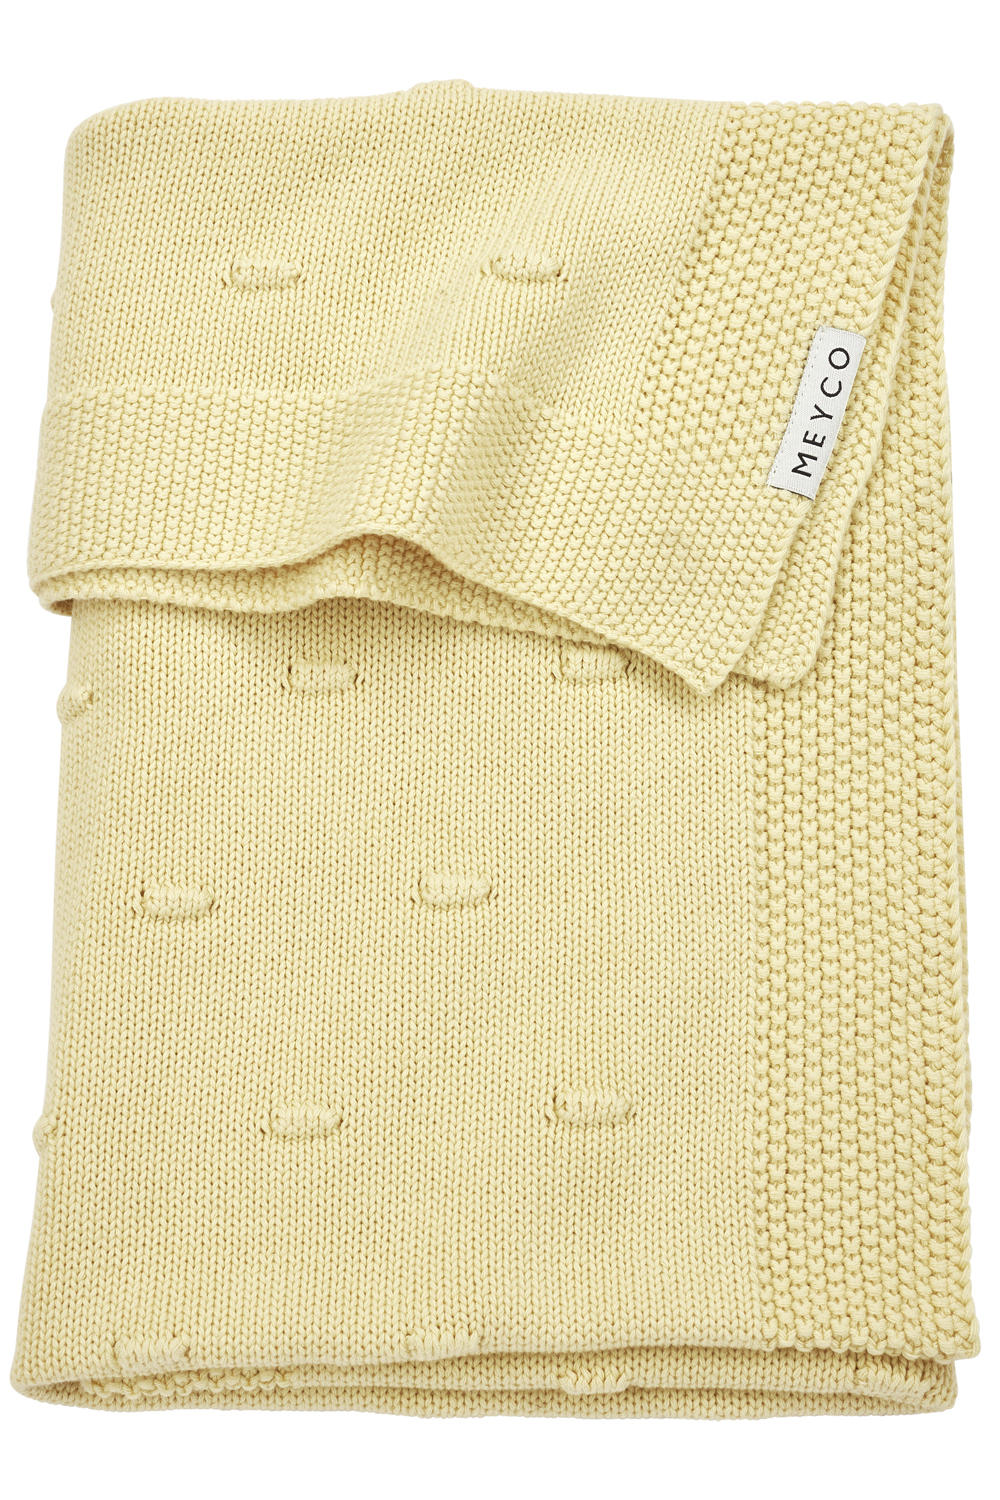 Crib bed blanket Knots - soft yellow - 75x100cm